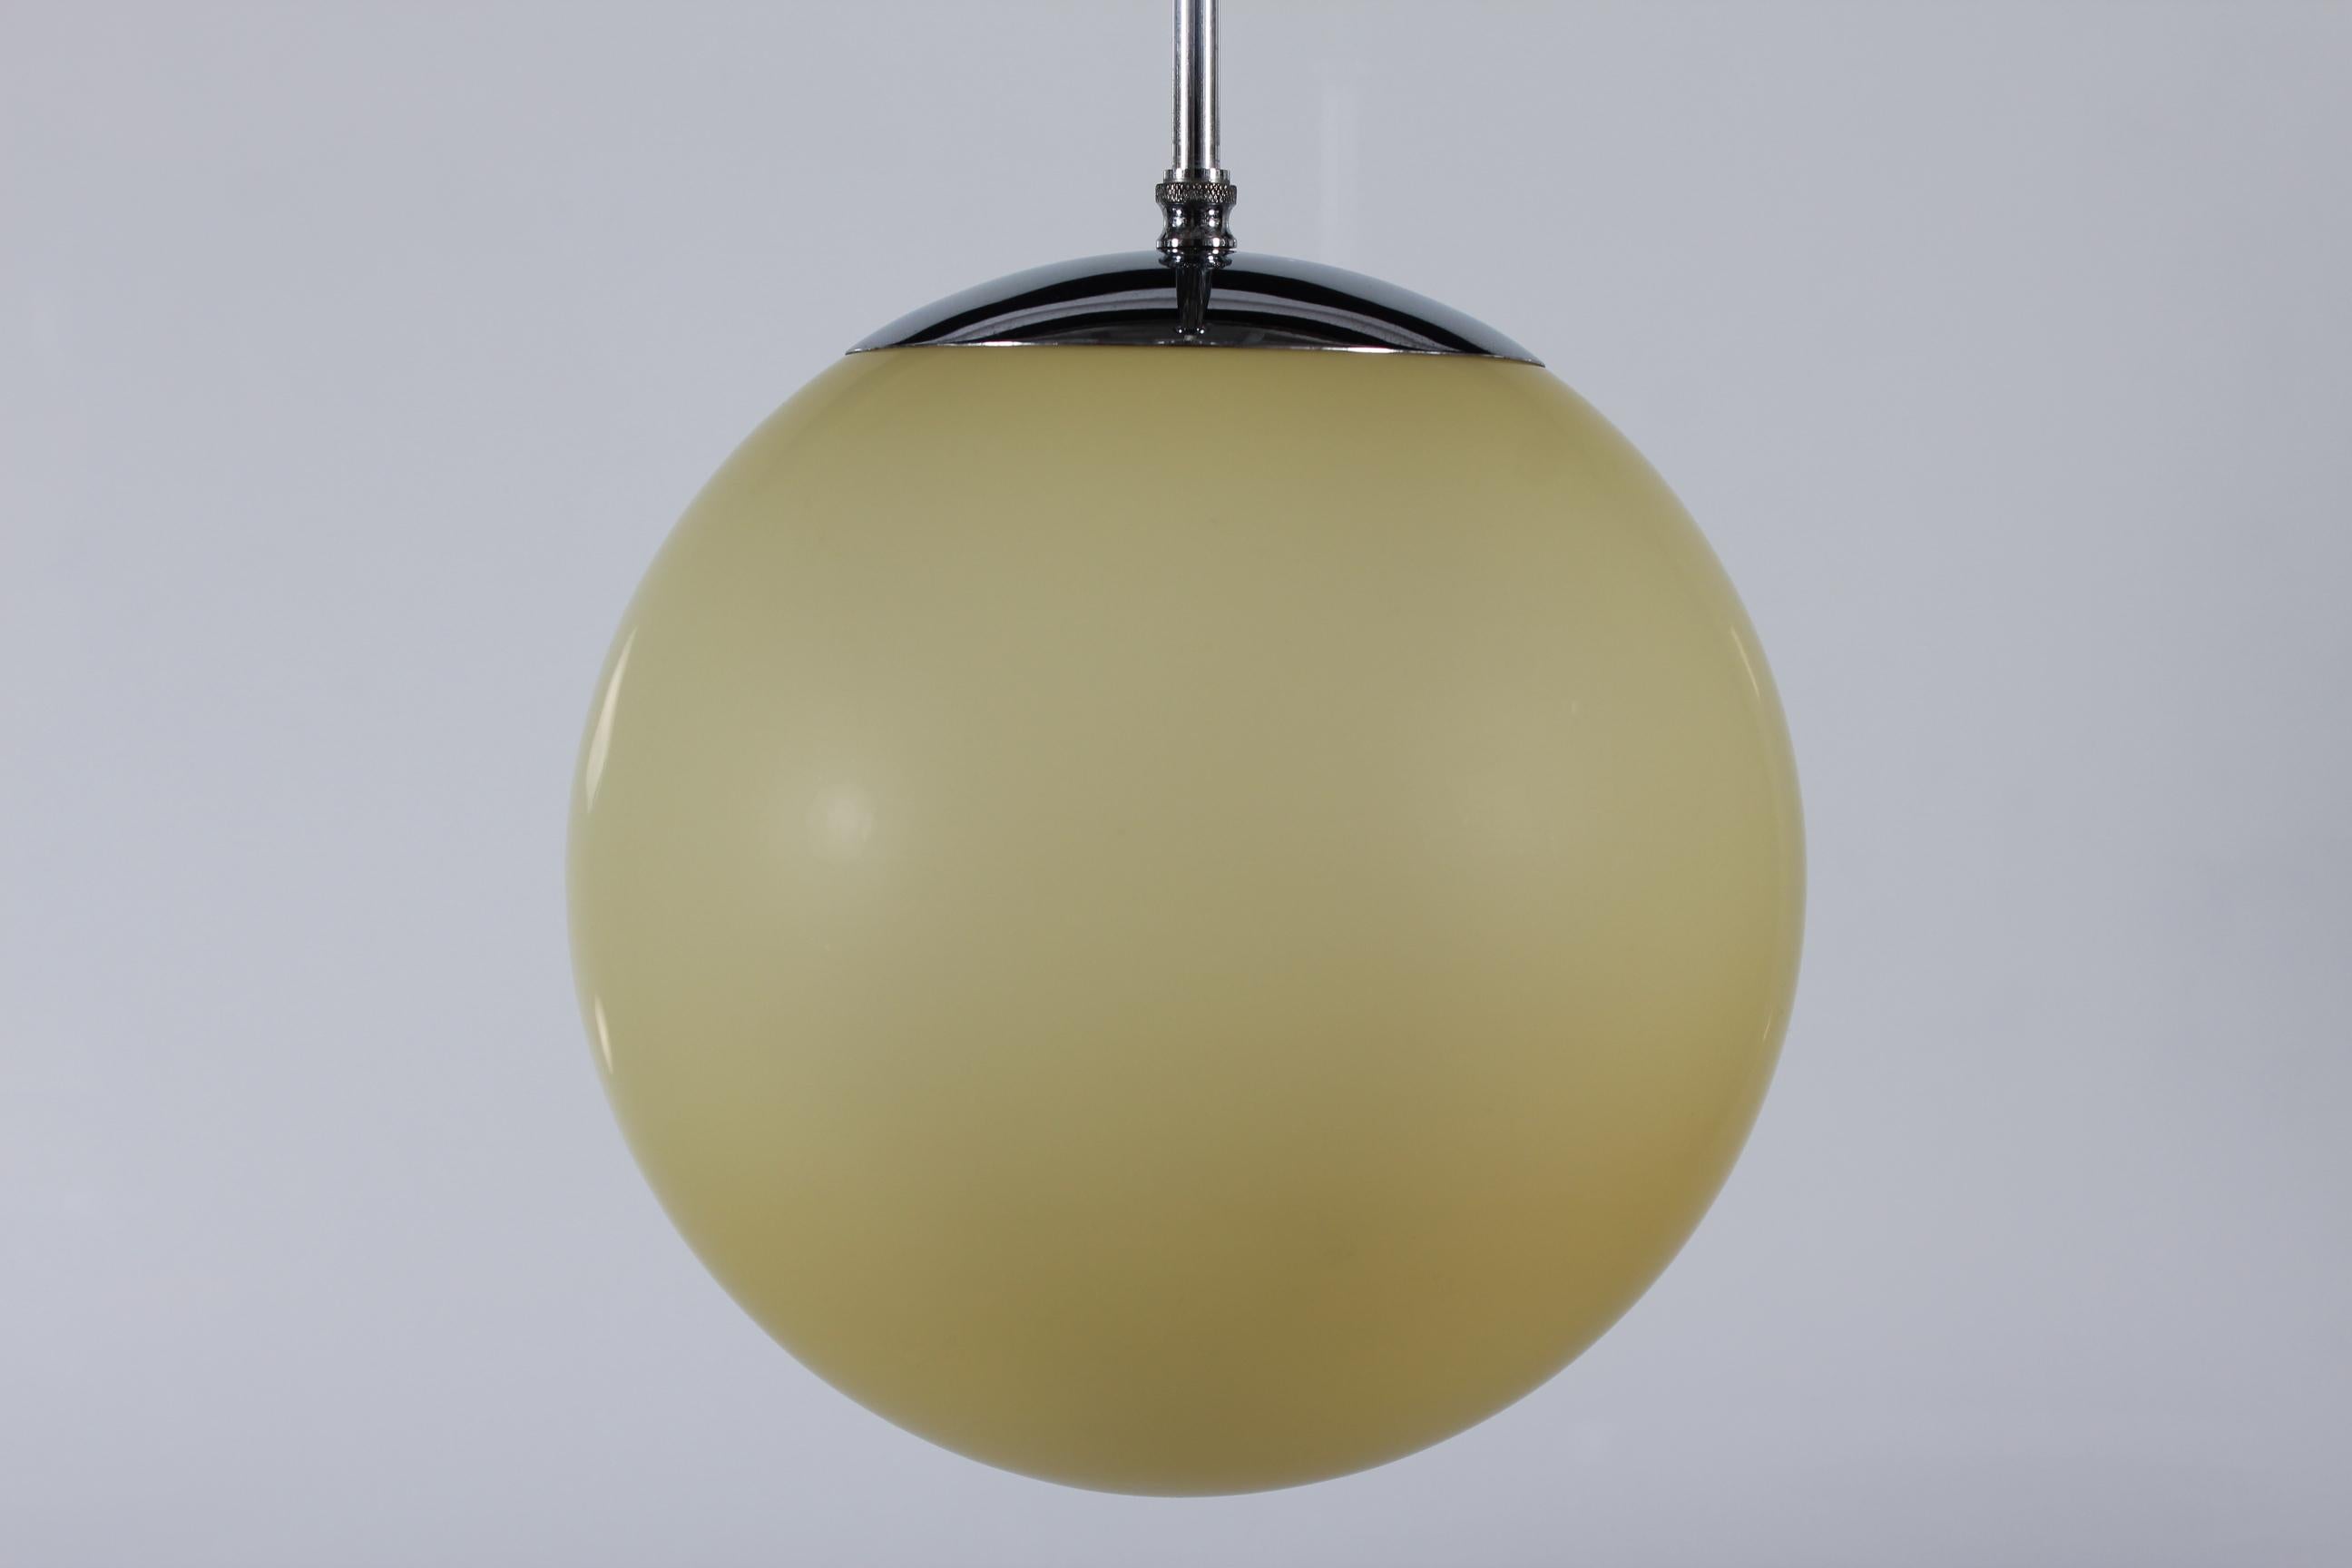 Art Deco Pendant Light Ball-Shaped Light Yellow Shade + Chrome, Denmark, 1930s In Good Condition For Sale In Aarhus C, DK